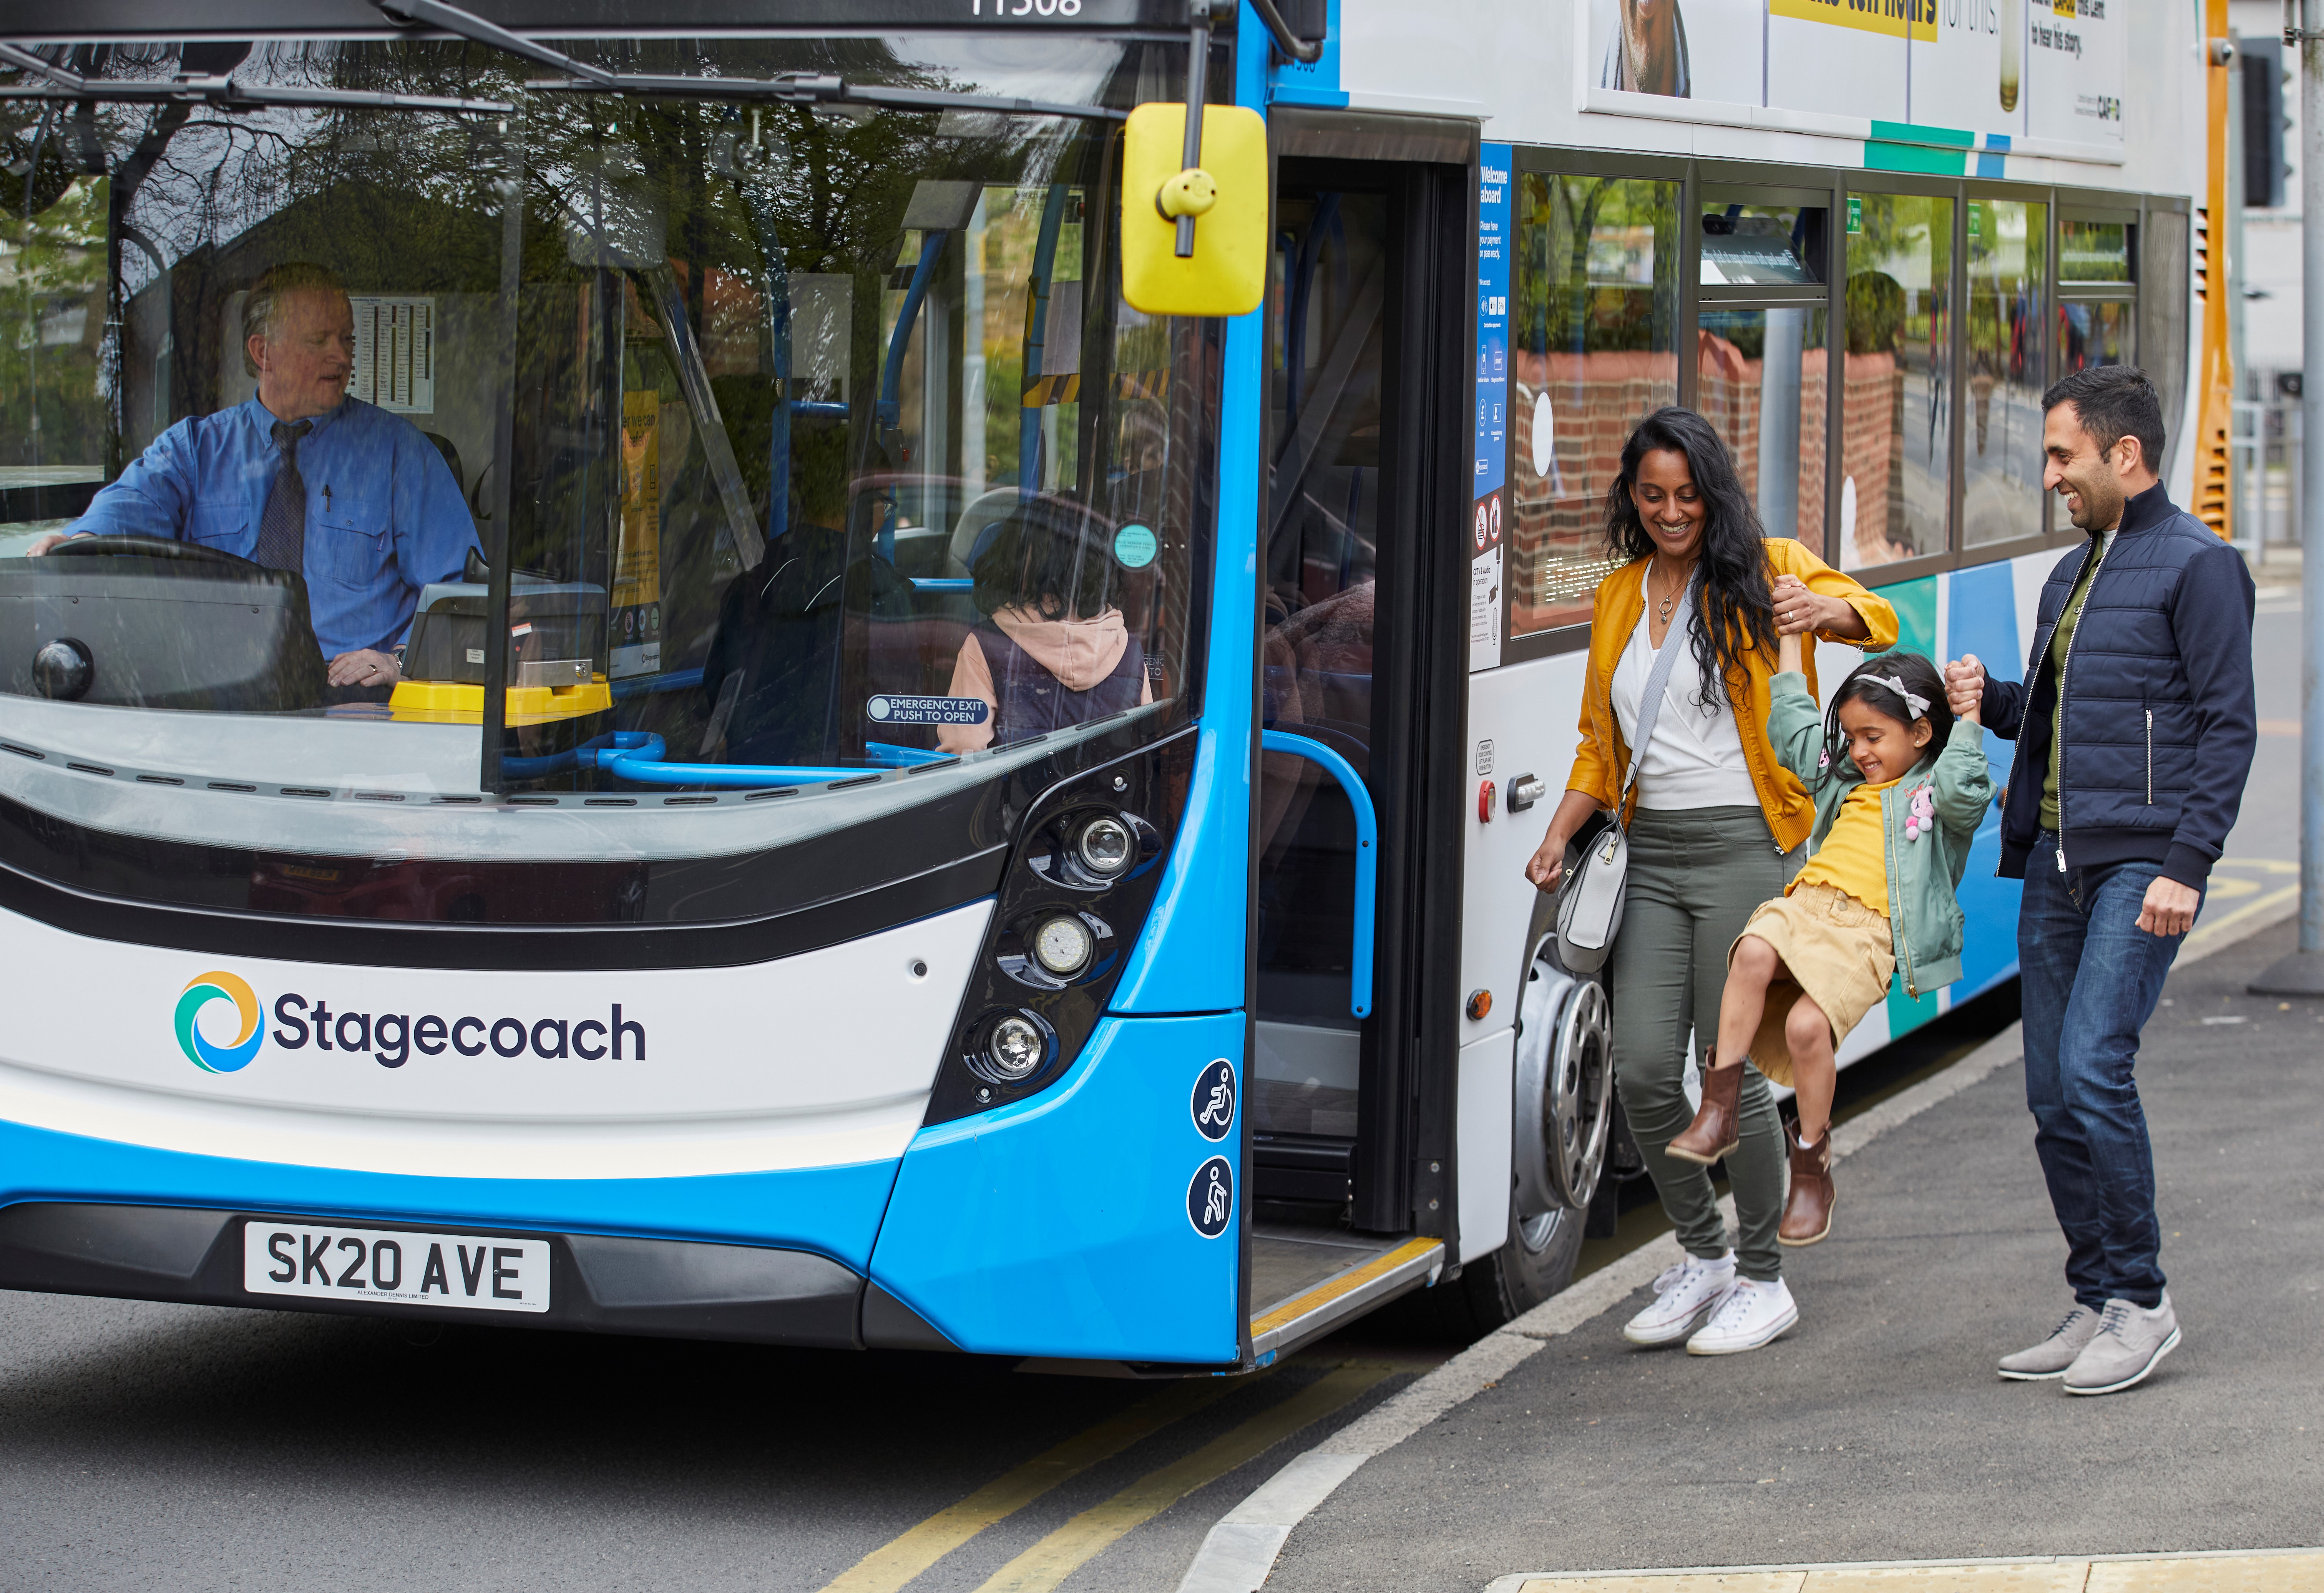 Choosing bus travel around 
Warwickshire is now cheaper